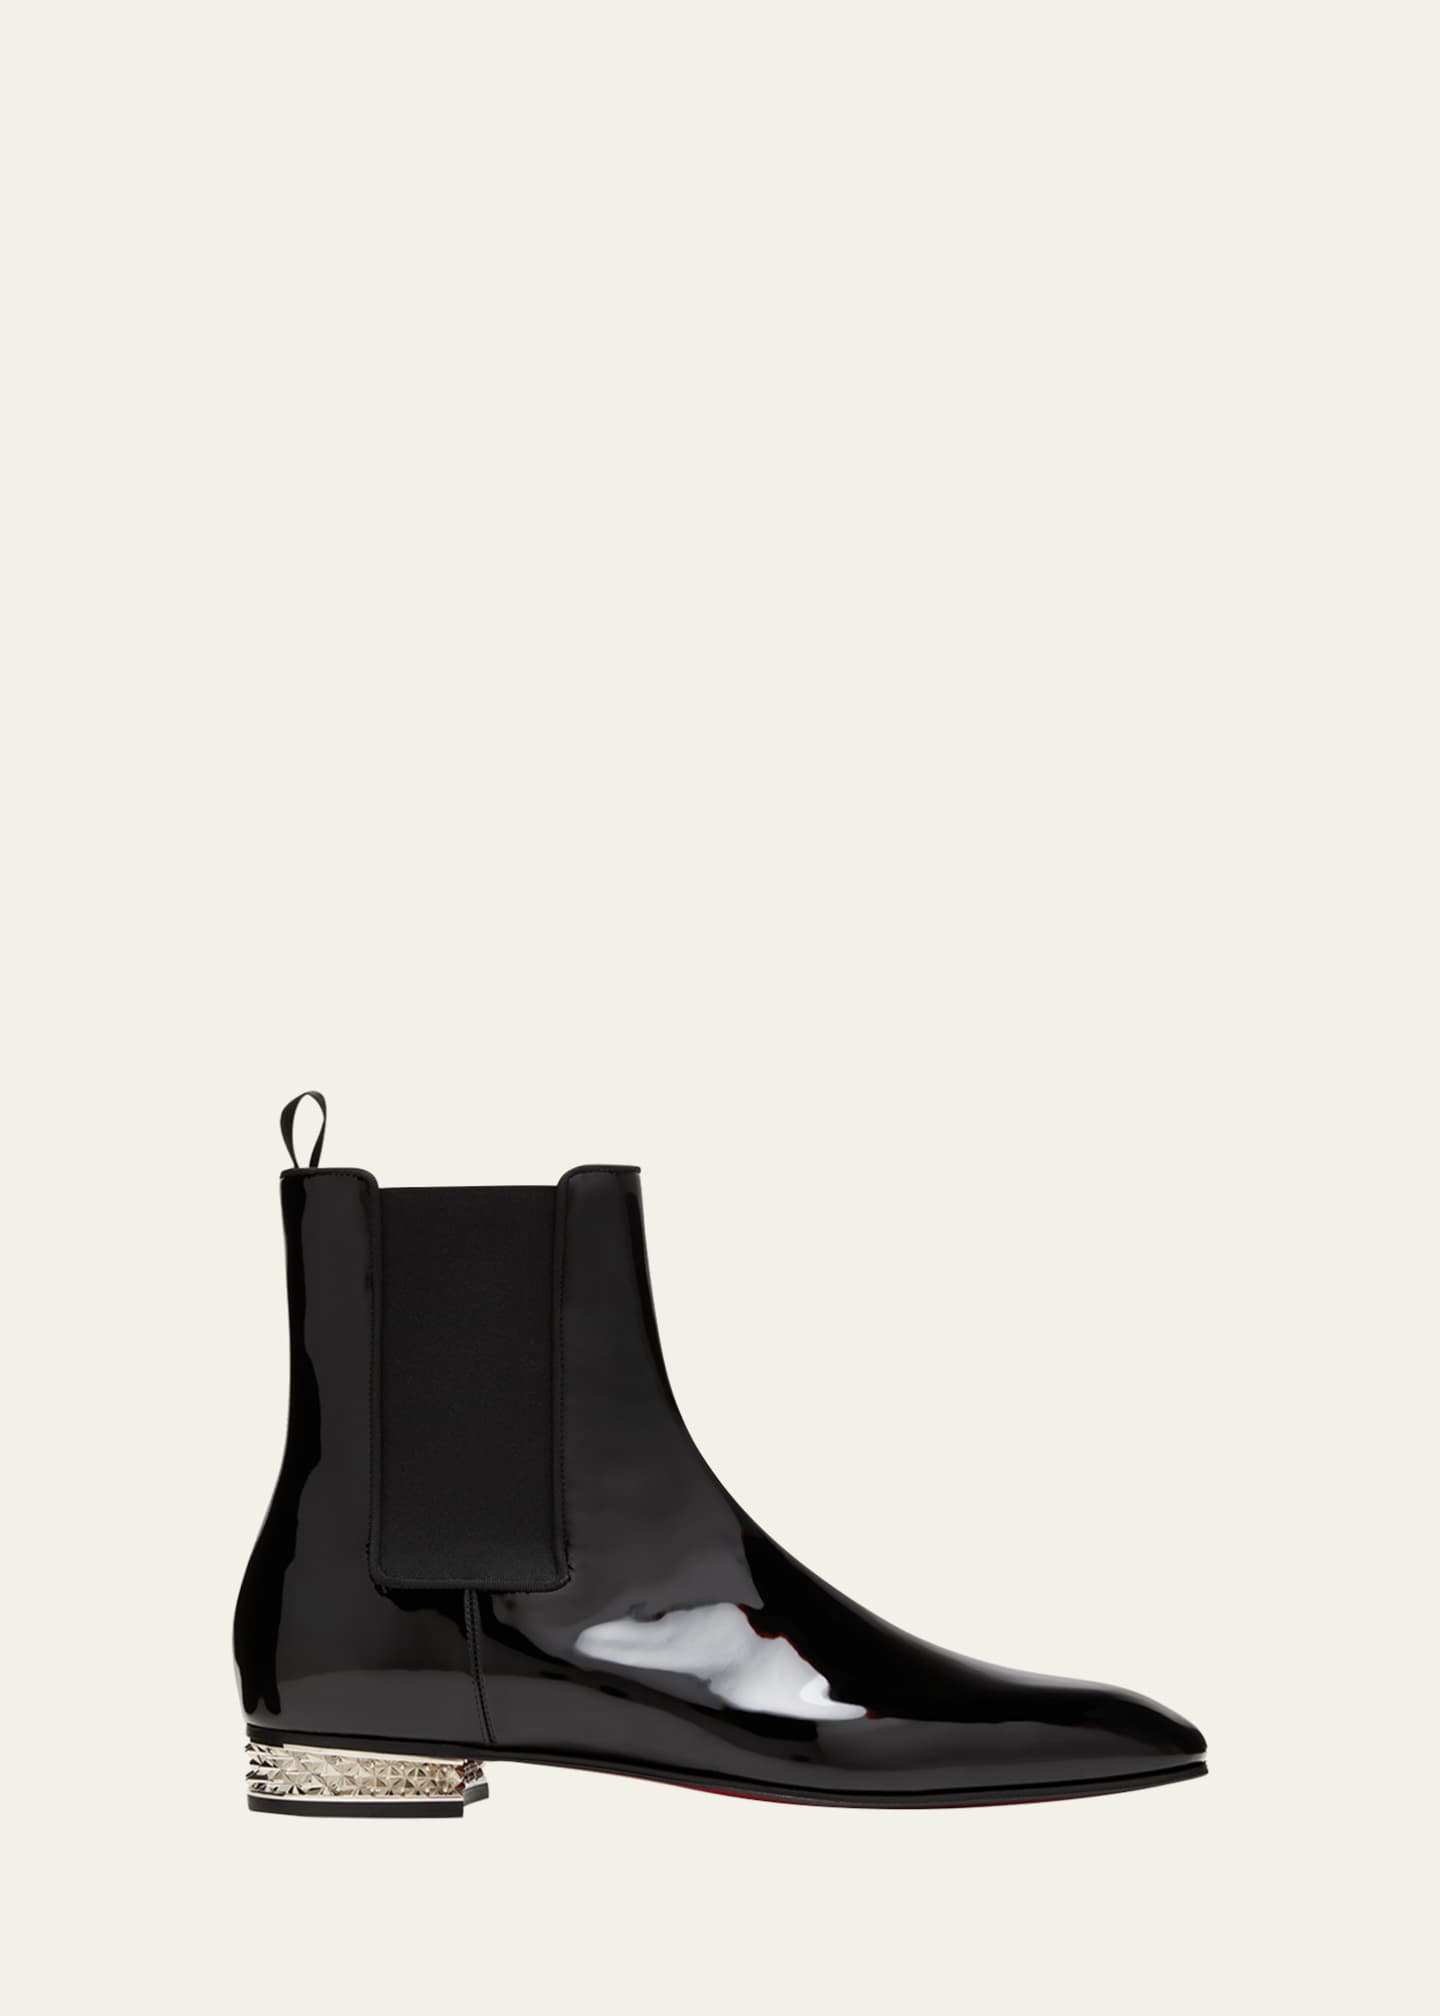 Louboutin Men's Roadyrocks Patent Leather Chelsea Boots Bergdorf